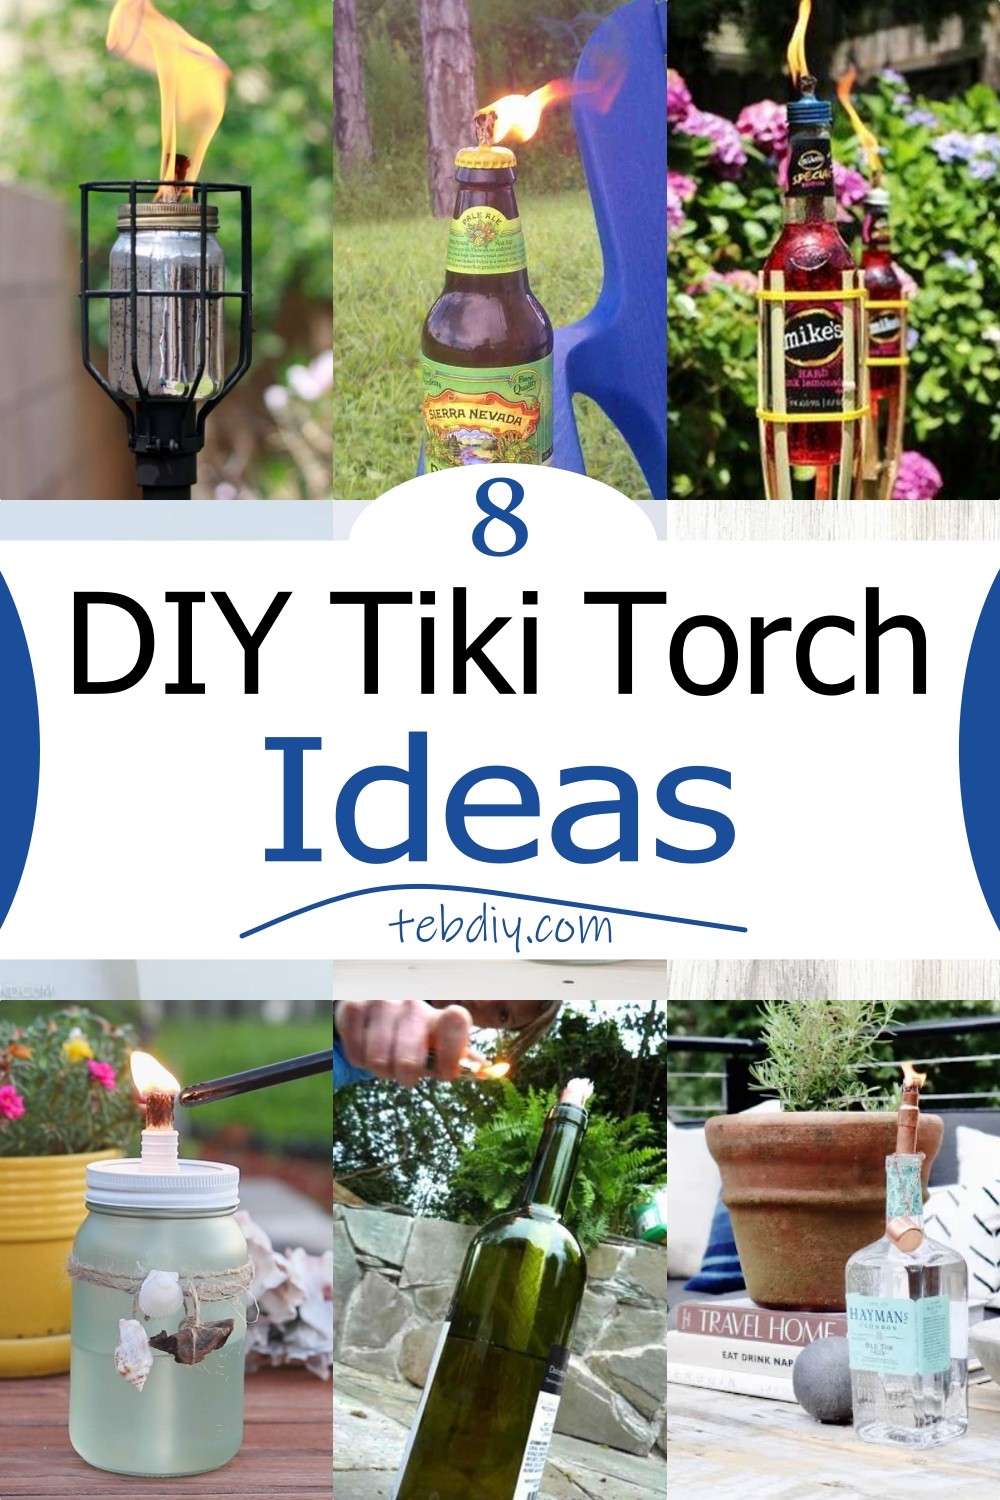 DIY Tiki Torch Ideas